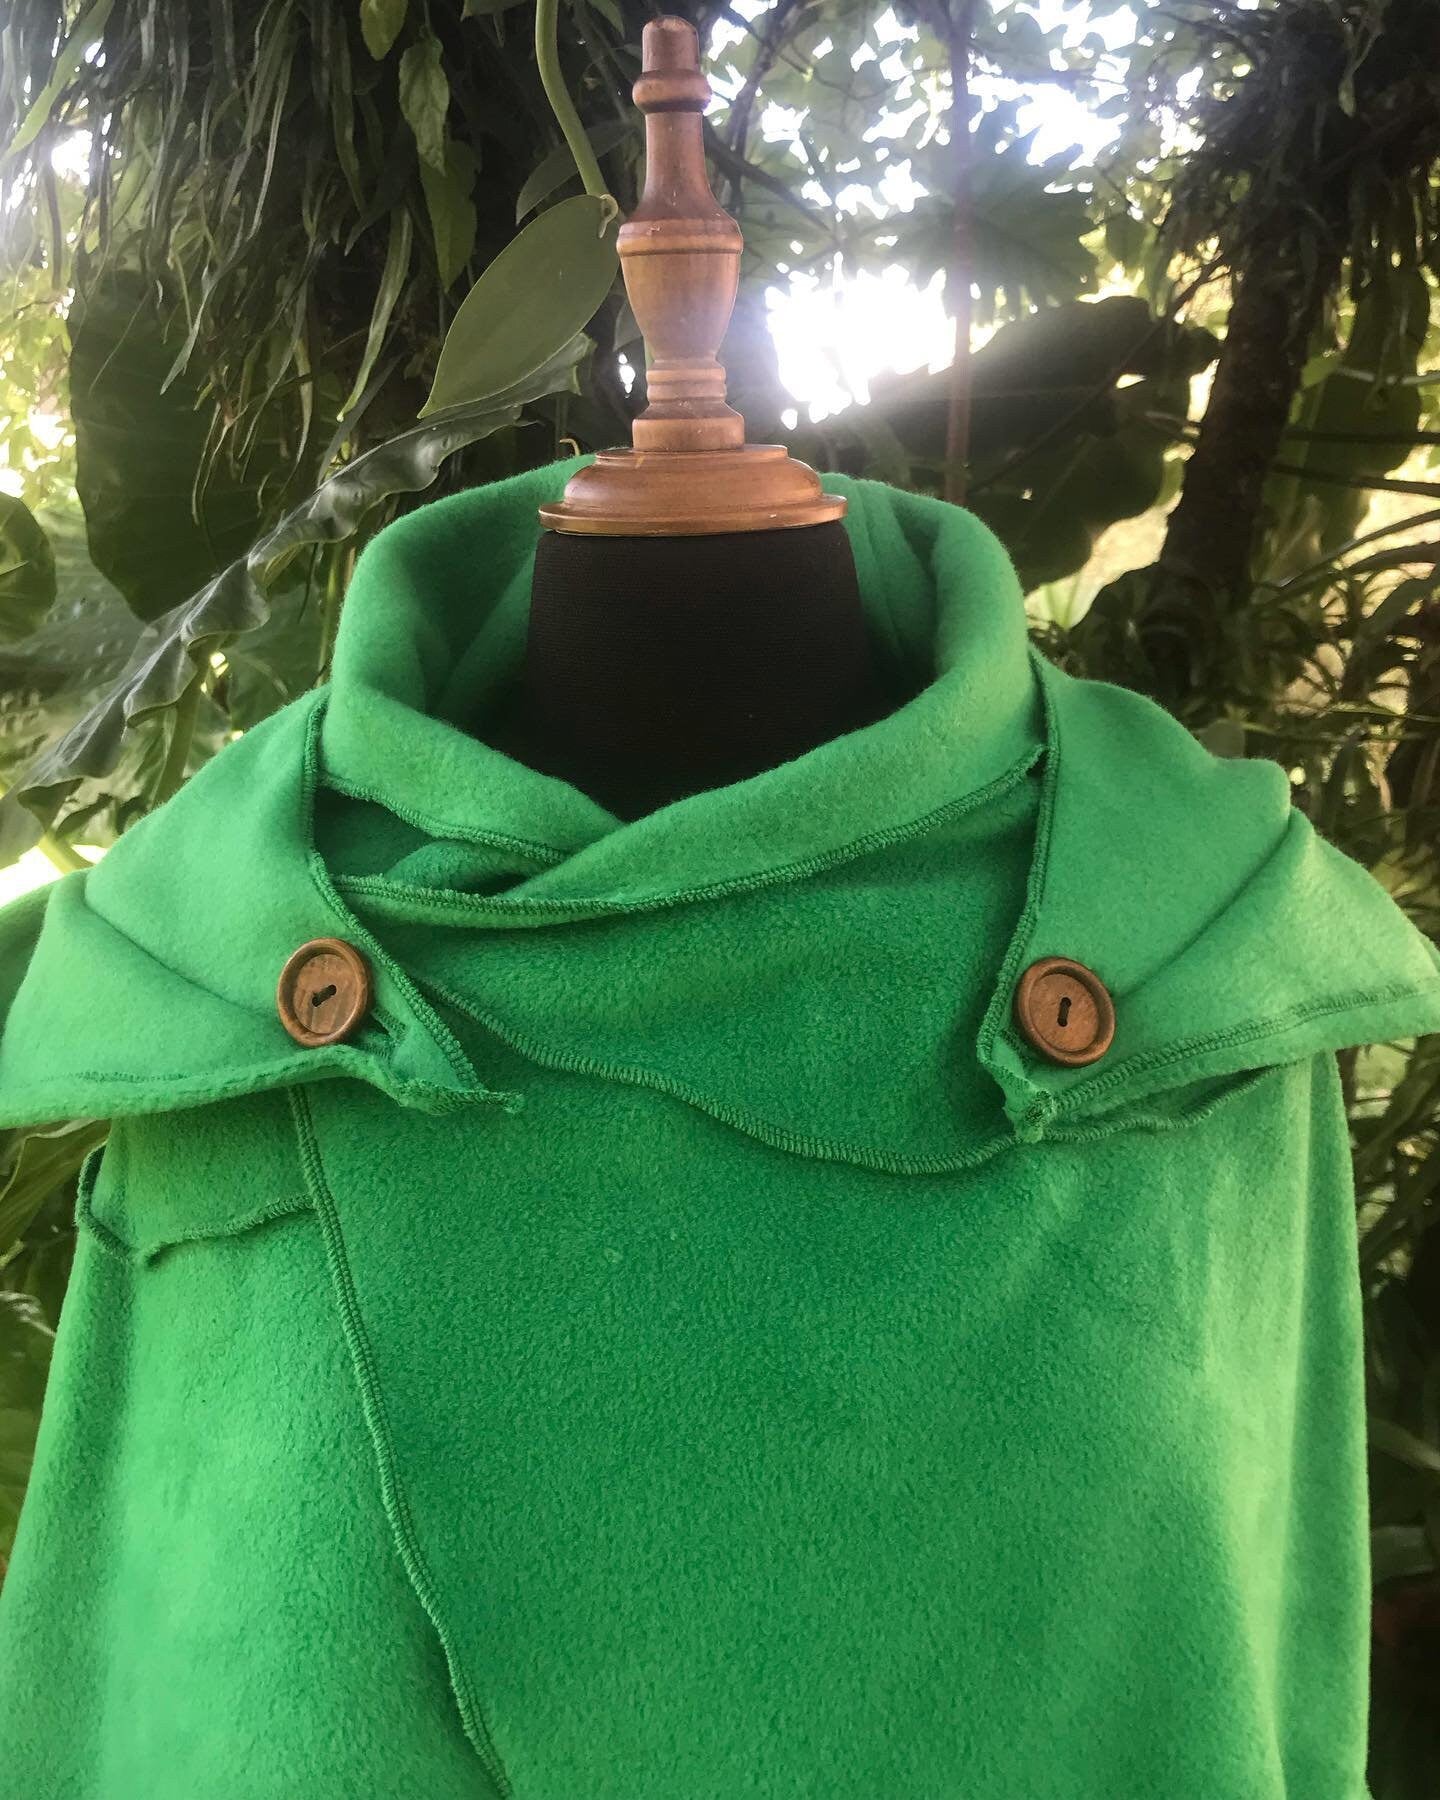 Bright Green - Leaf Cape Poncho with Giant Pixie Hood - - cloak - cape